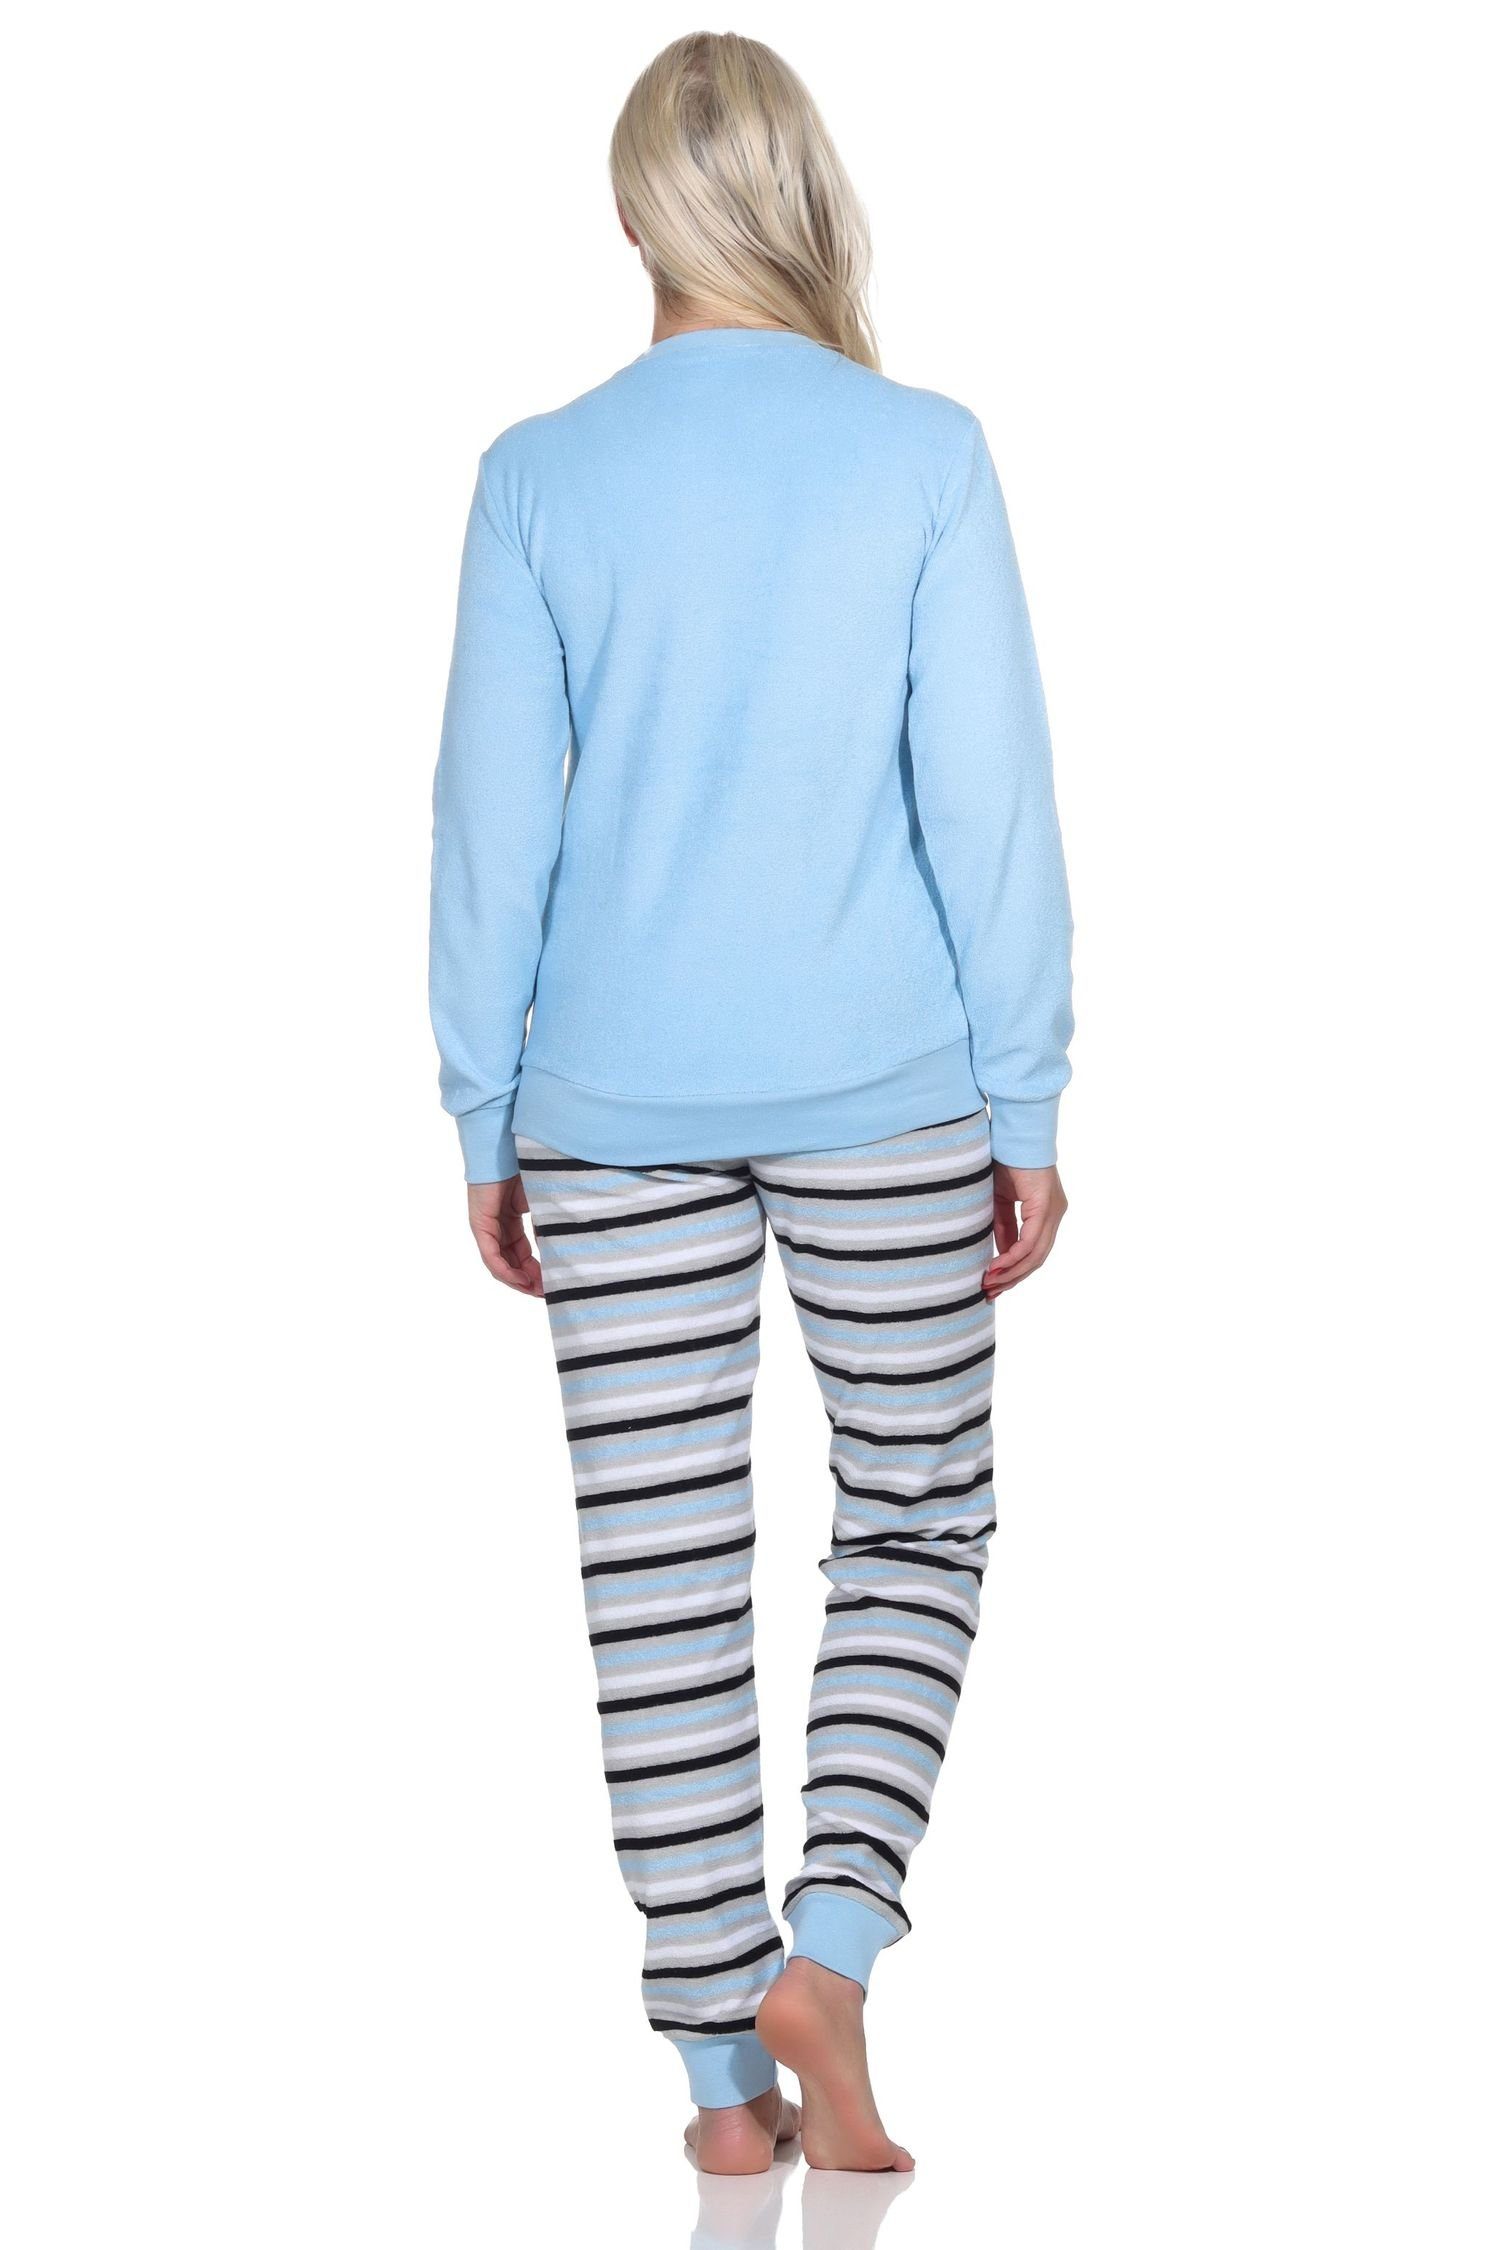 Normann Tiermotiv Frottee Oberteil Pyjama süssen Pyjama, Hose Damen mit gestreift, blau